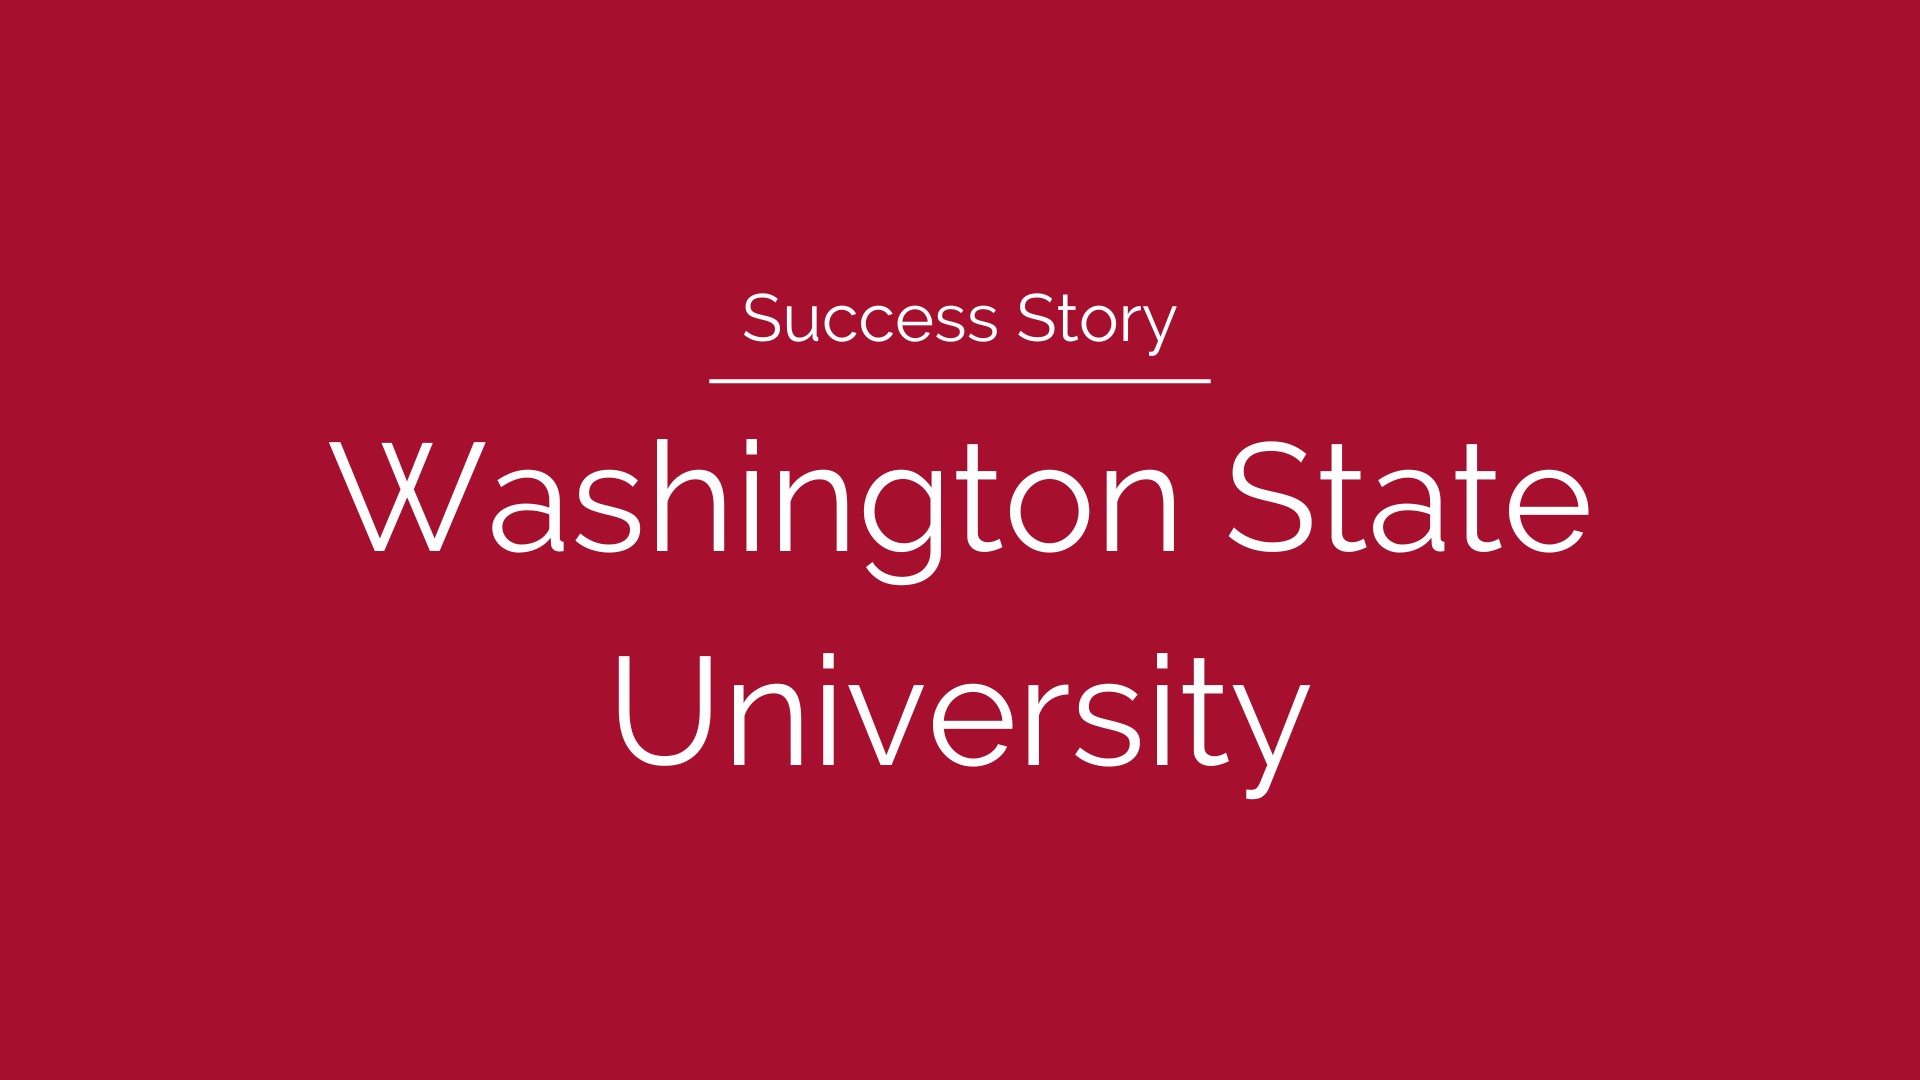 Success Story: Washington State University